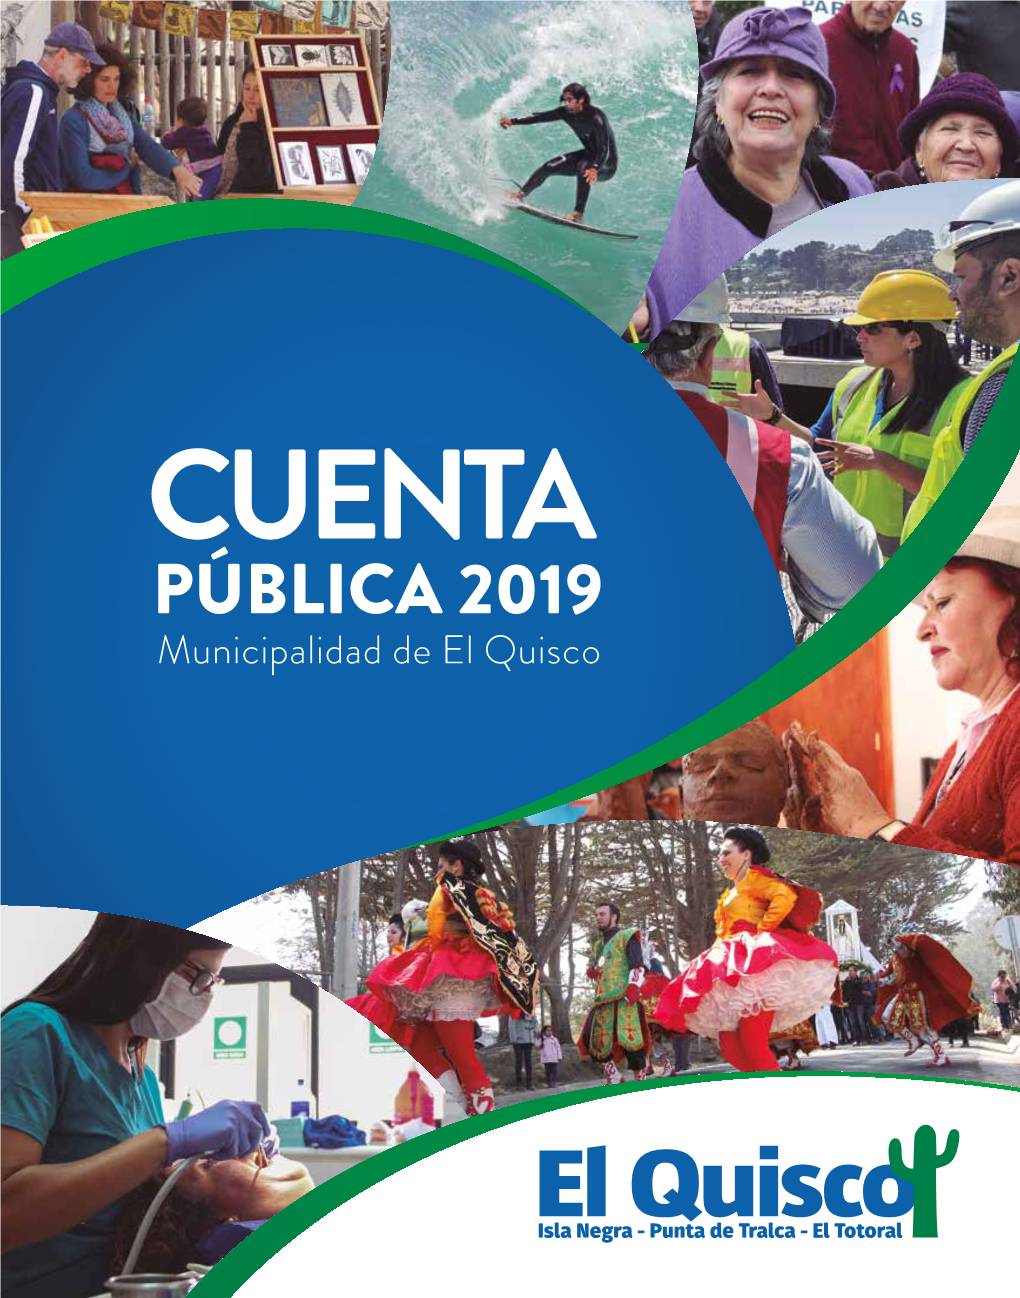 PÚBLICA 2019 Municipalidad De El Quisco CUENTA PÚBLICA 2019 Municipalidad De El Quisco 2 Honorable Concejo Municipal De El Quisco 2016 - 2020